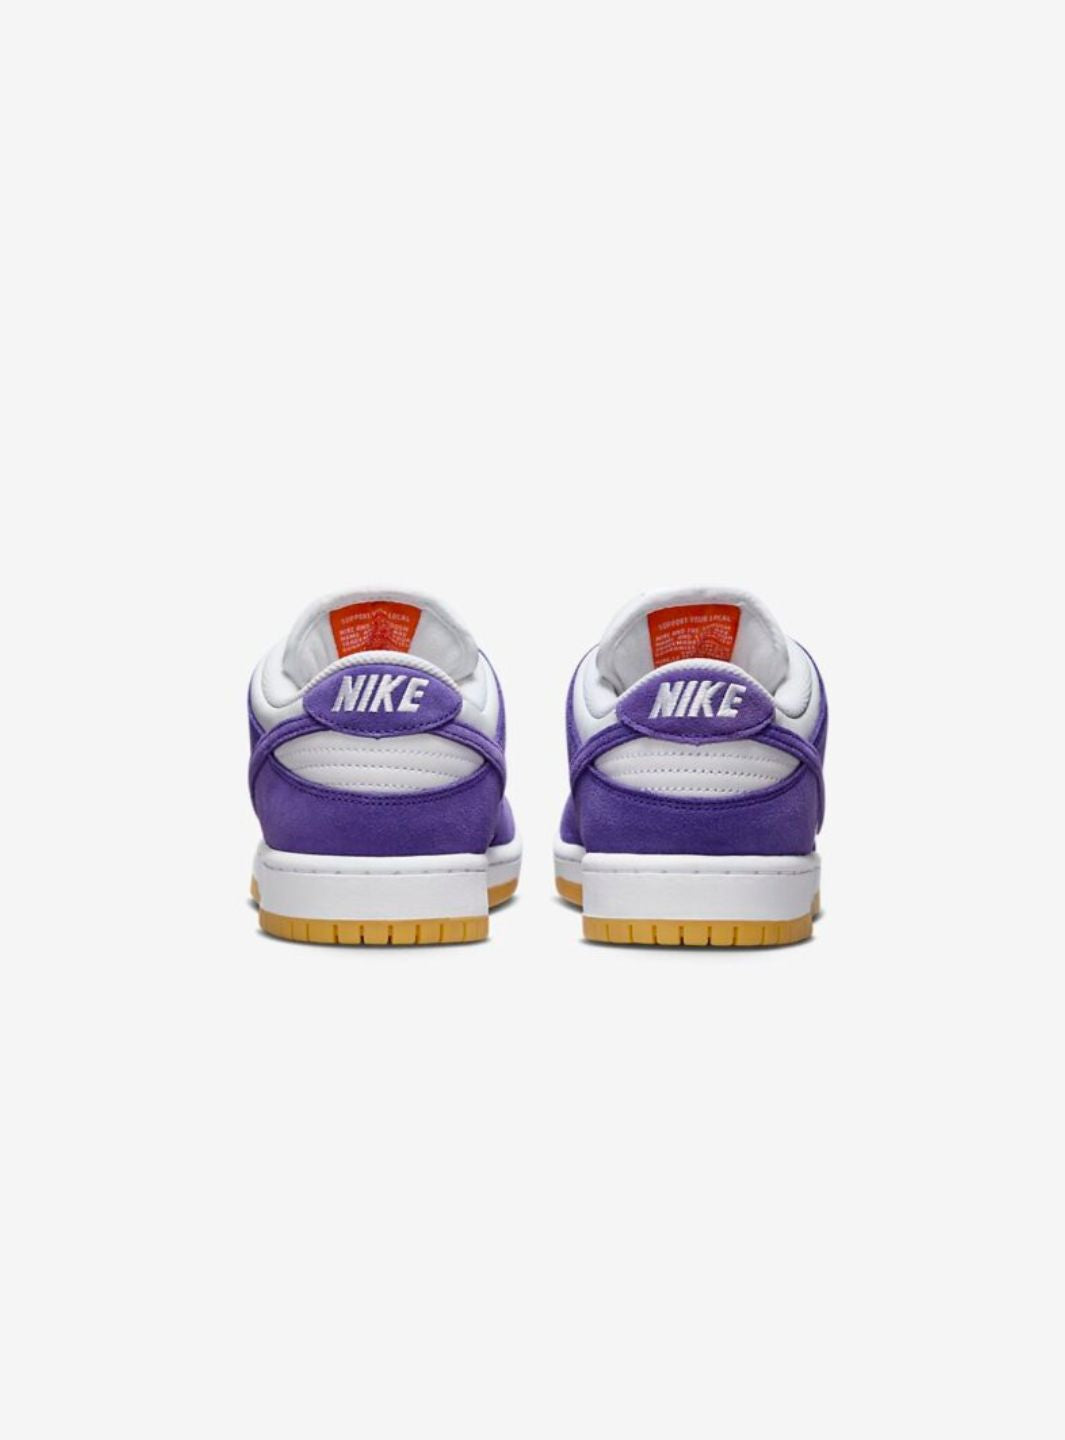 Nike SB Dunk Low Pro ISO Orange Label Court Purple - DV5464-500 | ResellZone